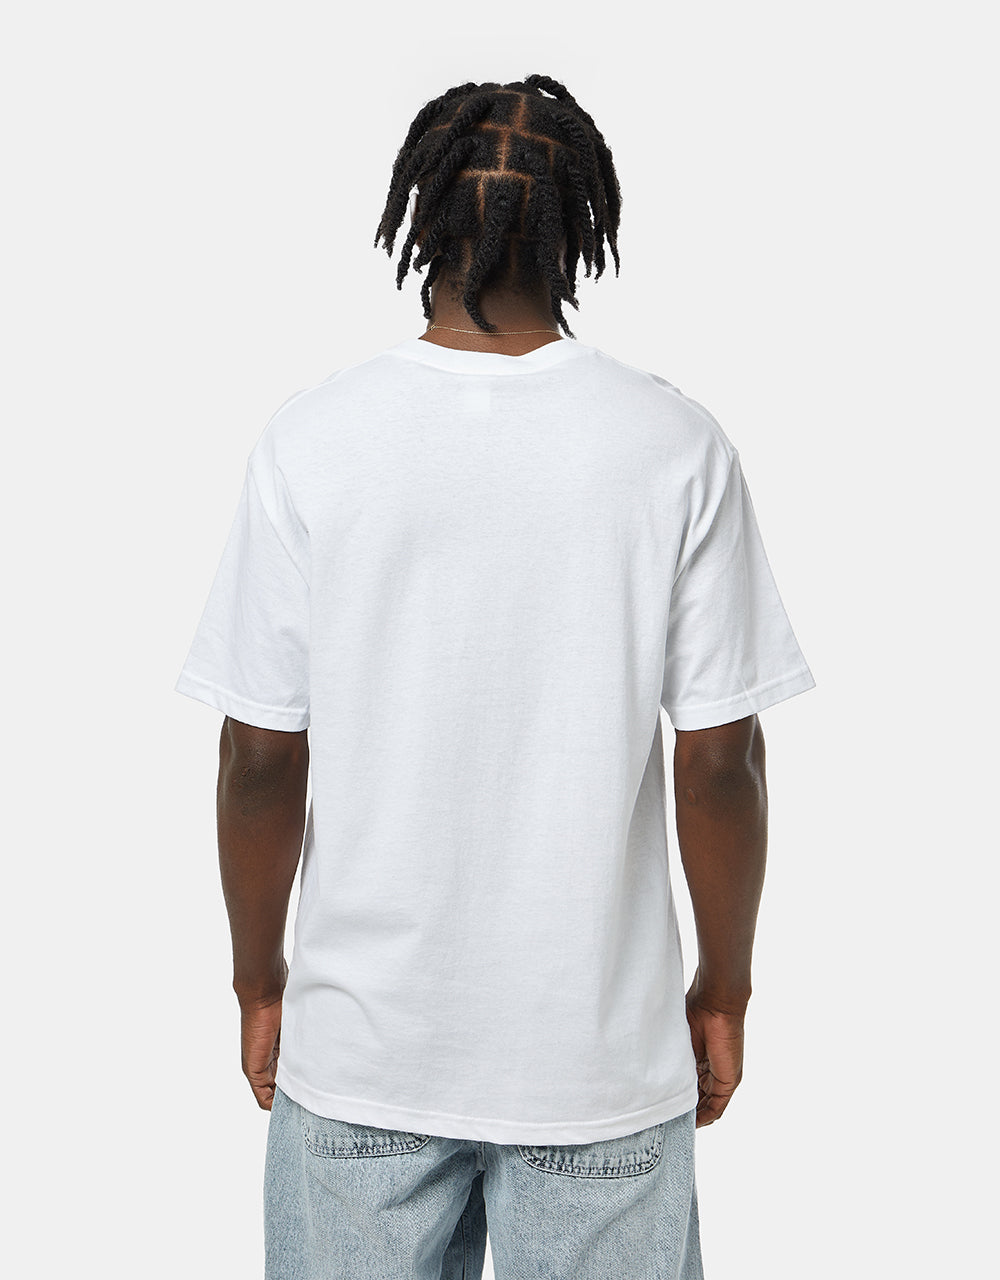 Carhartt WIP S/S Script T-Shirt - White/Black